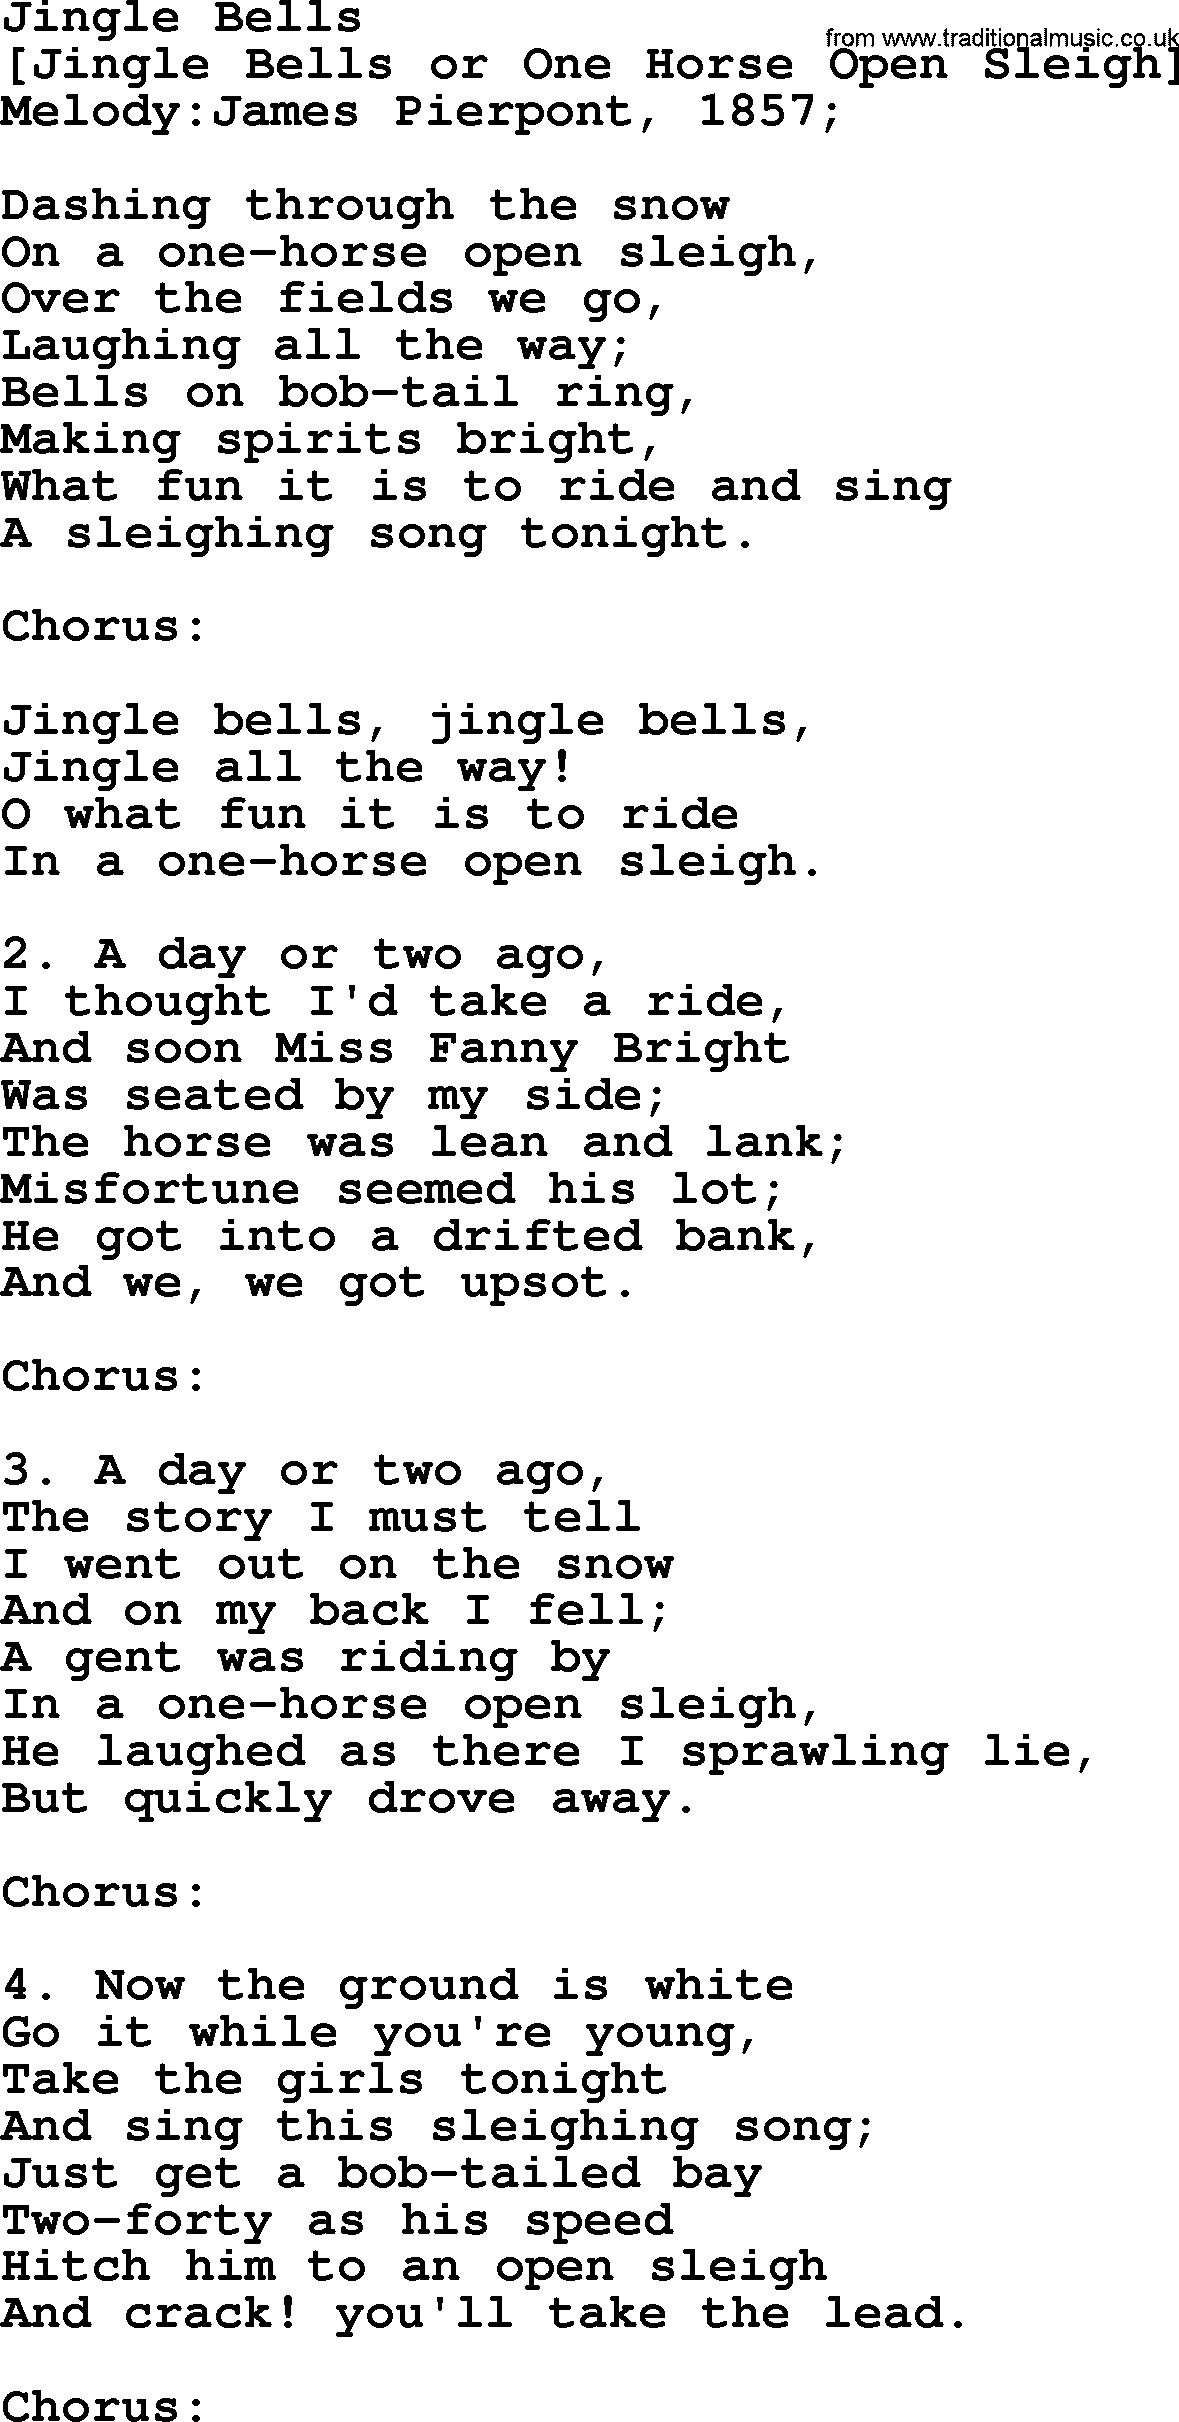 Old American Song: Jingle Bells, lyrics